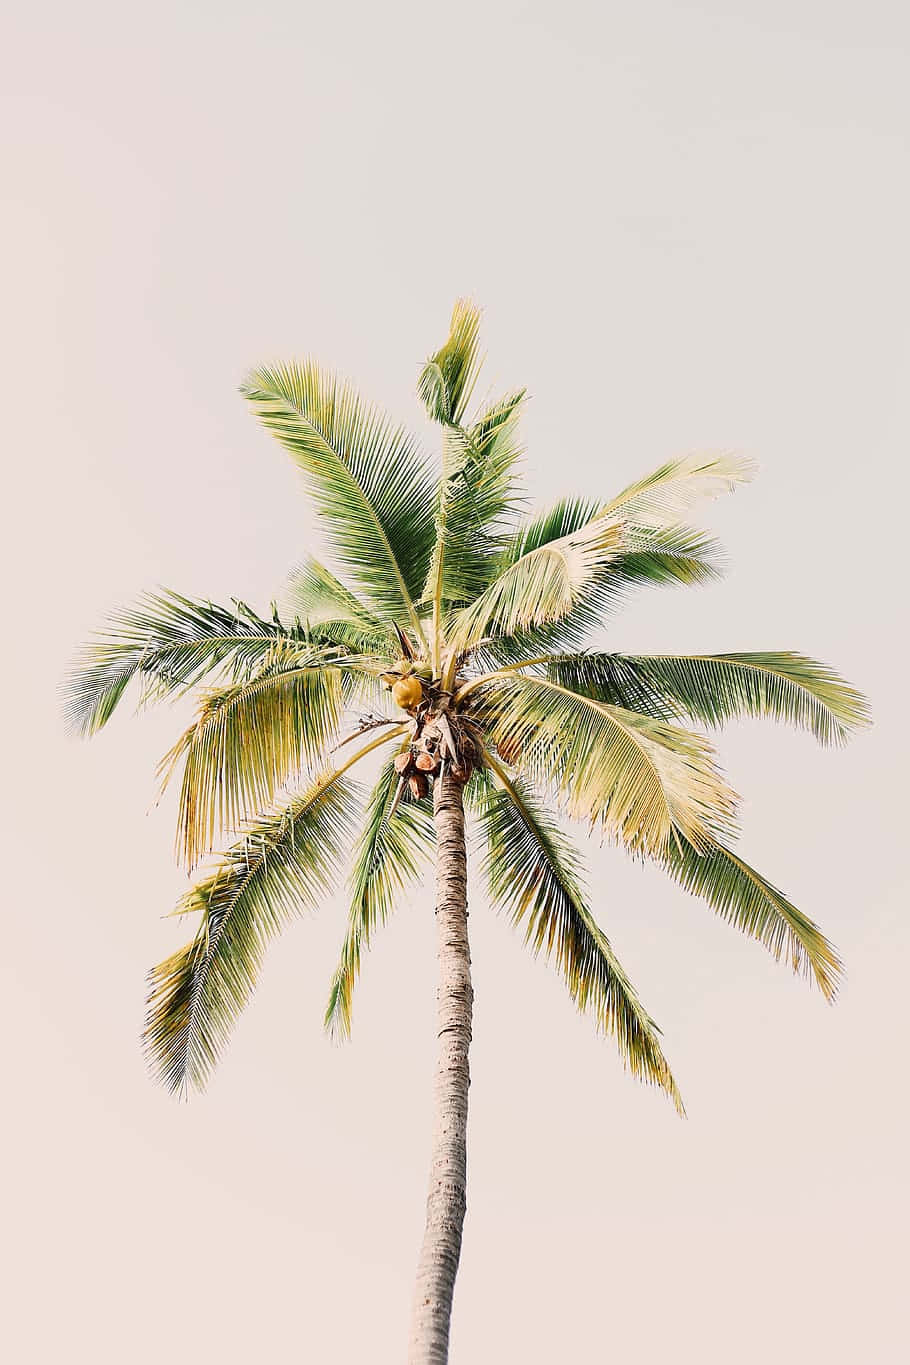 Solo Coconut Palm Aesthetic.jpg Wallpaper